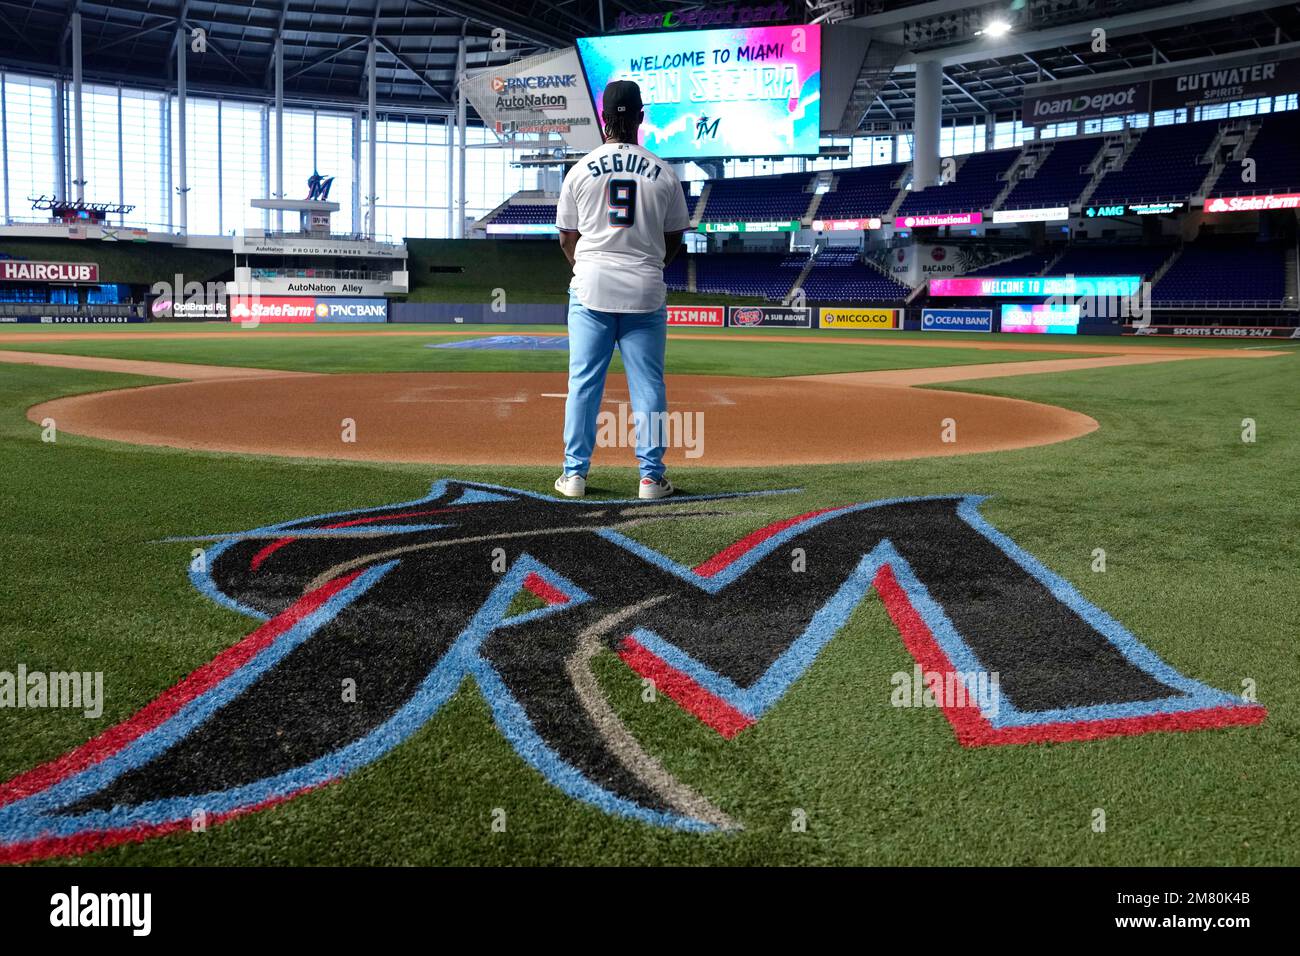 Miami Marlins baseball infielder Jean Segura wears a Marlins